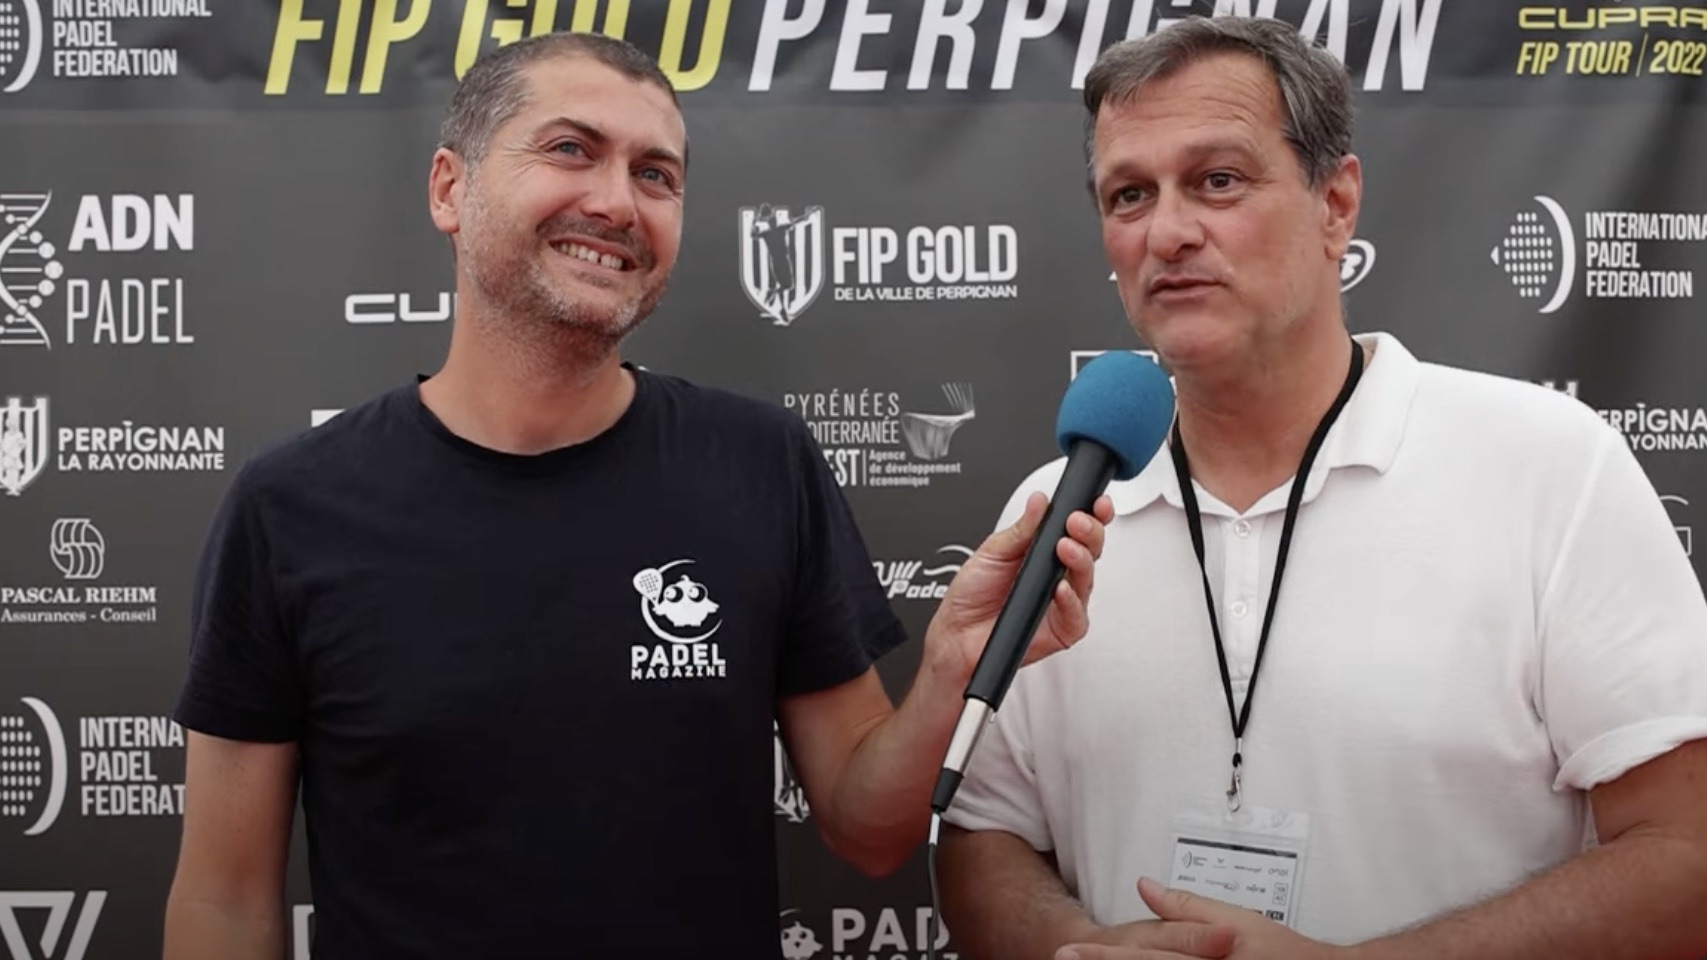 Louis Aliot: "Perpignan FIP Gold er en fest"